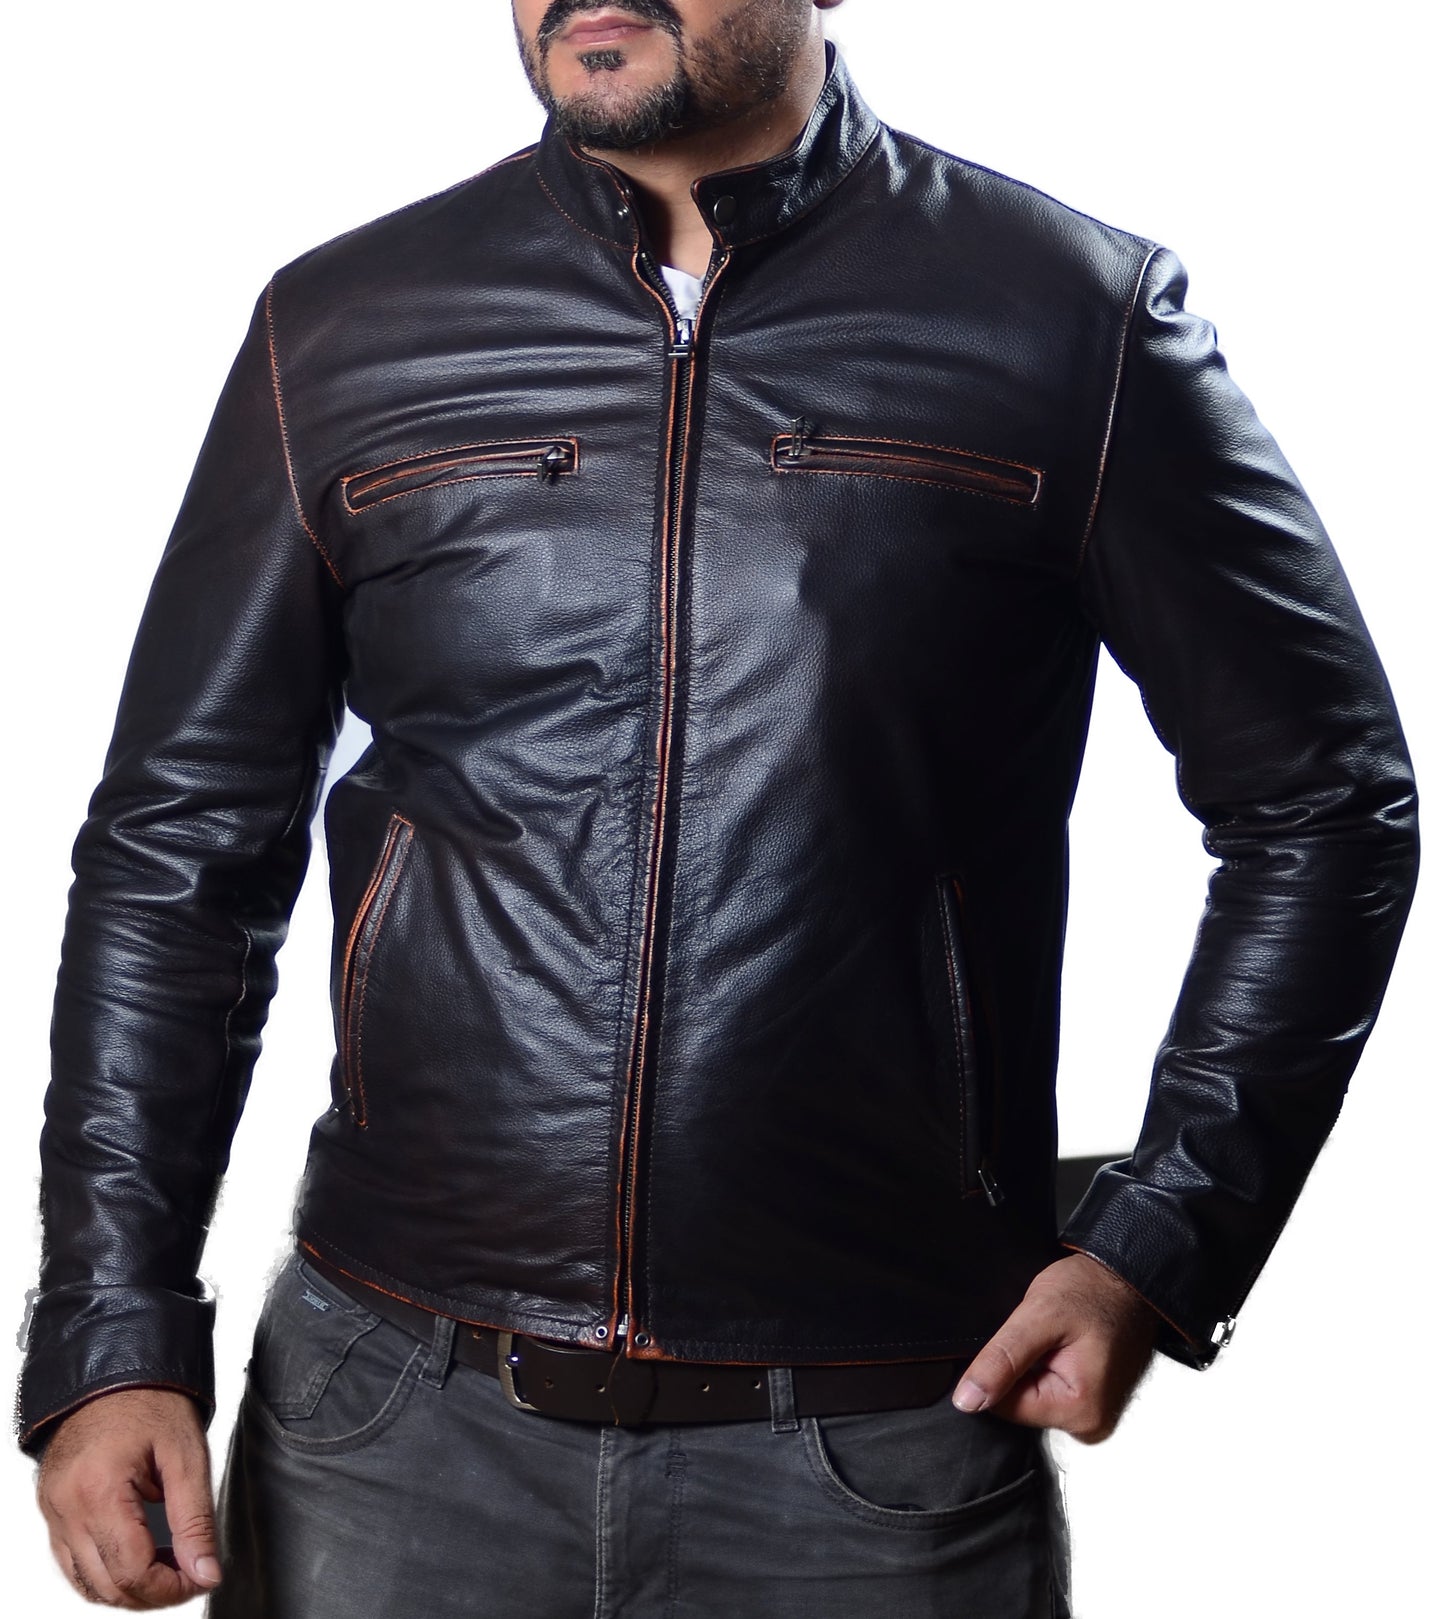 Men's New Contraband Diamond Distressed Black Vintage Look Biker Leather Jacket